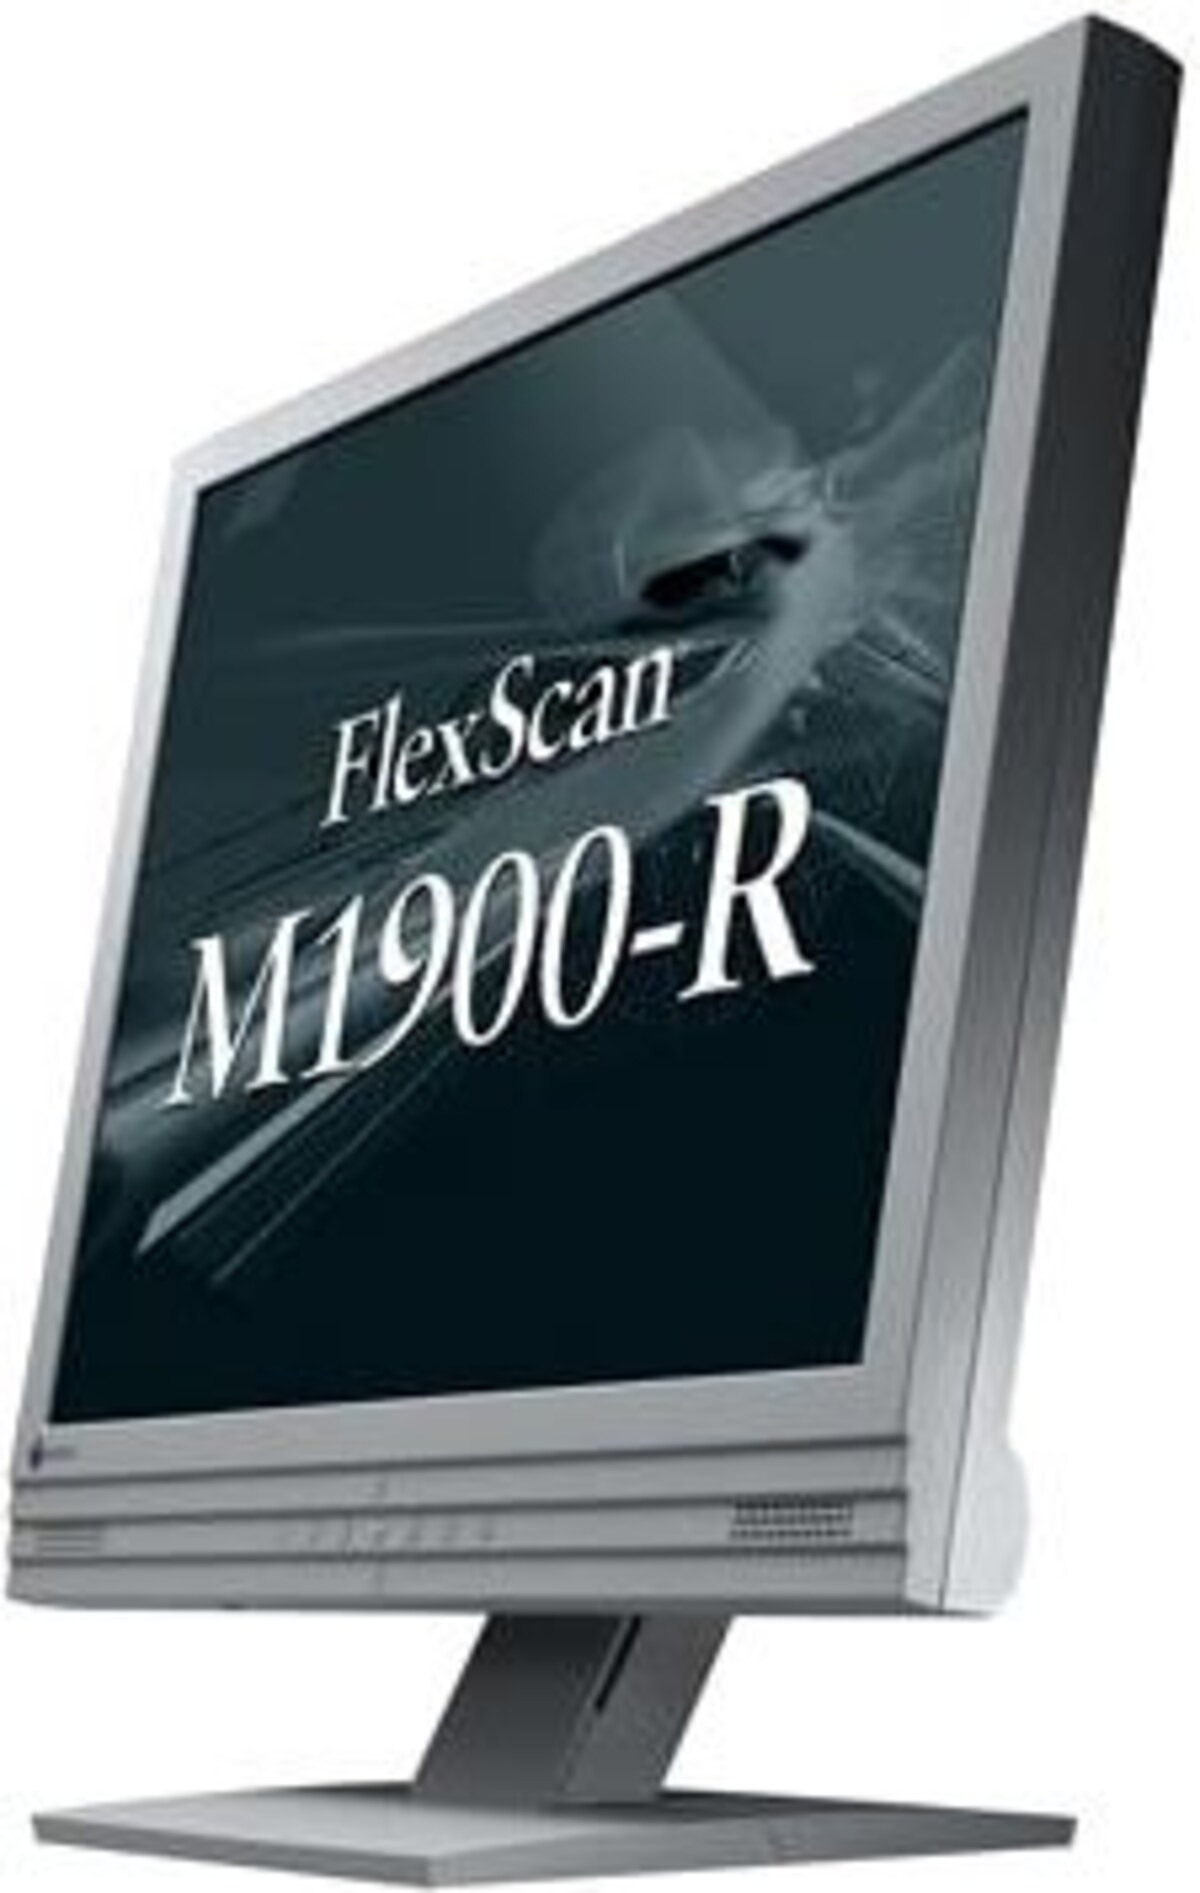 FlexScan M1900C-R 19インチ 光沢パネル液晶ディスプレイ セーレングレイ M1900C-RGY (リサイクル対応)